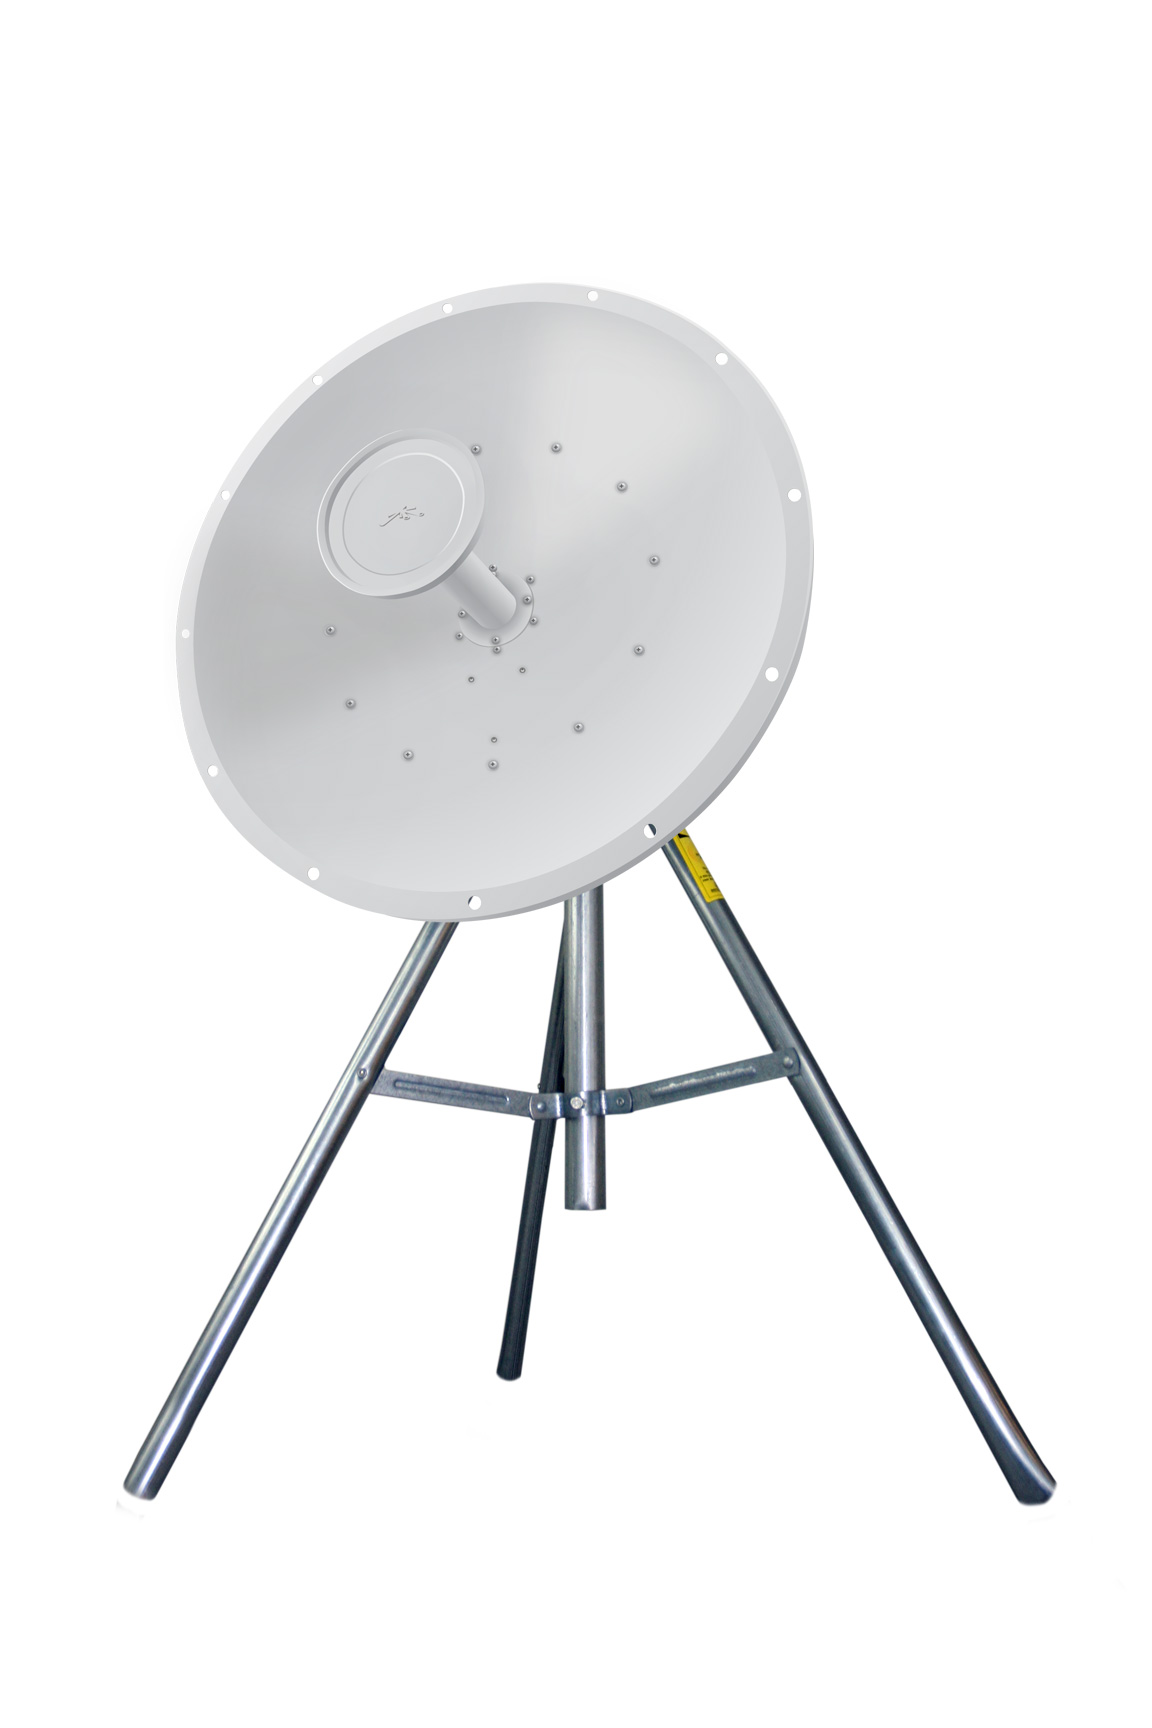 rocket dish airmax antenna - lisconet.com